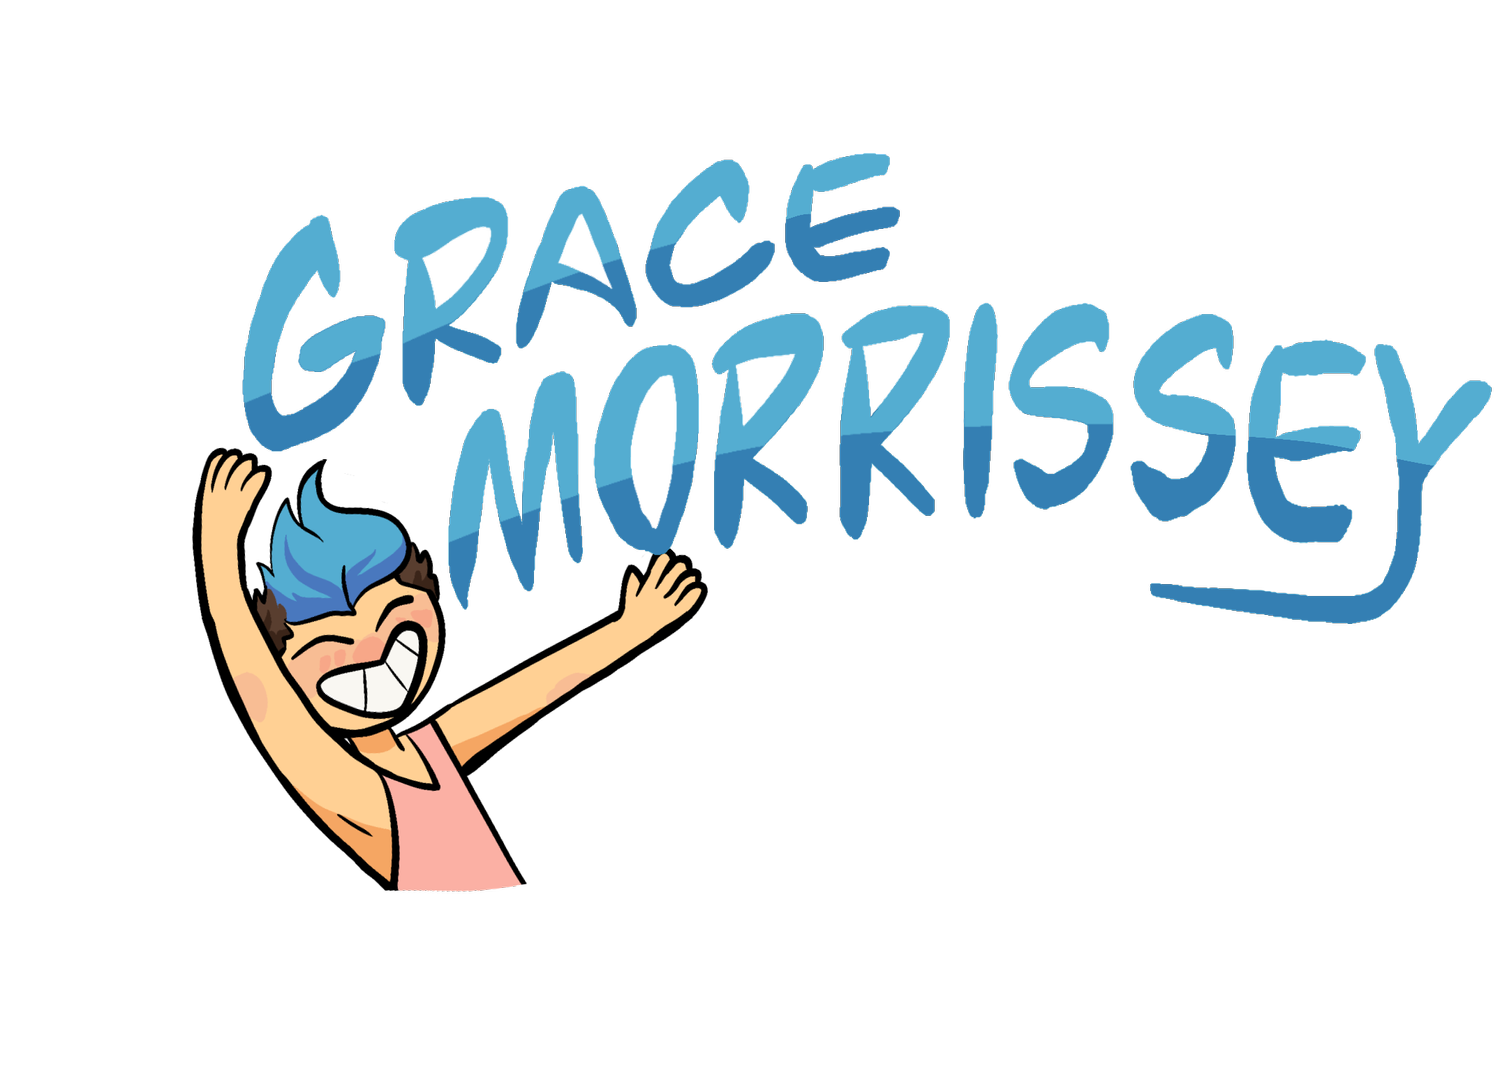 Grace Morrissey Animation